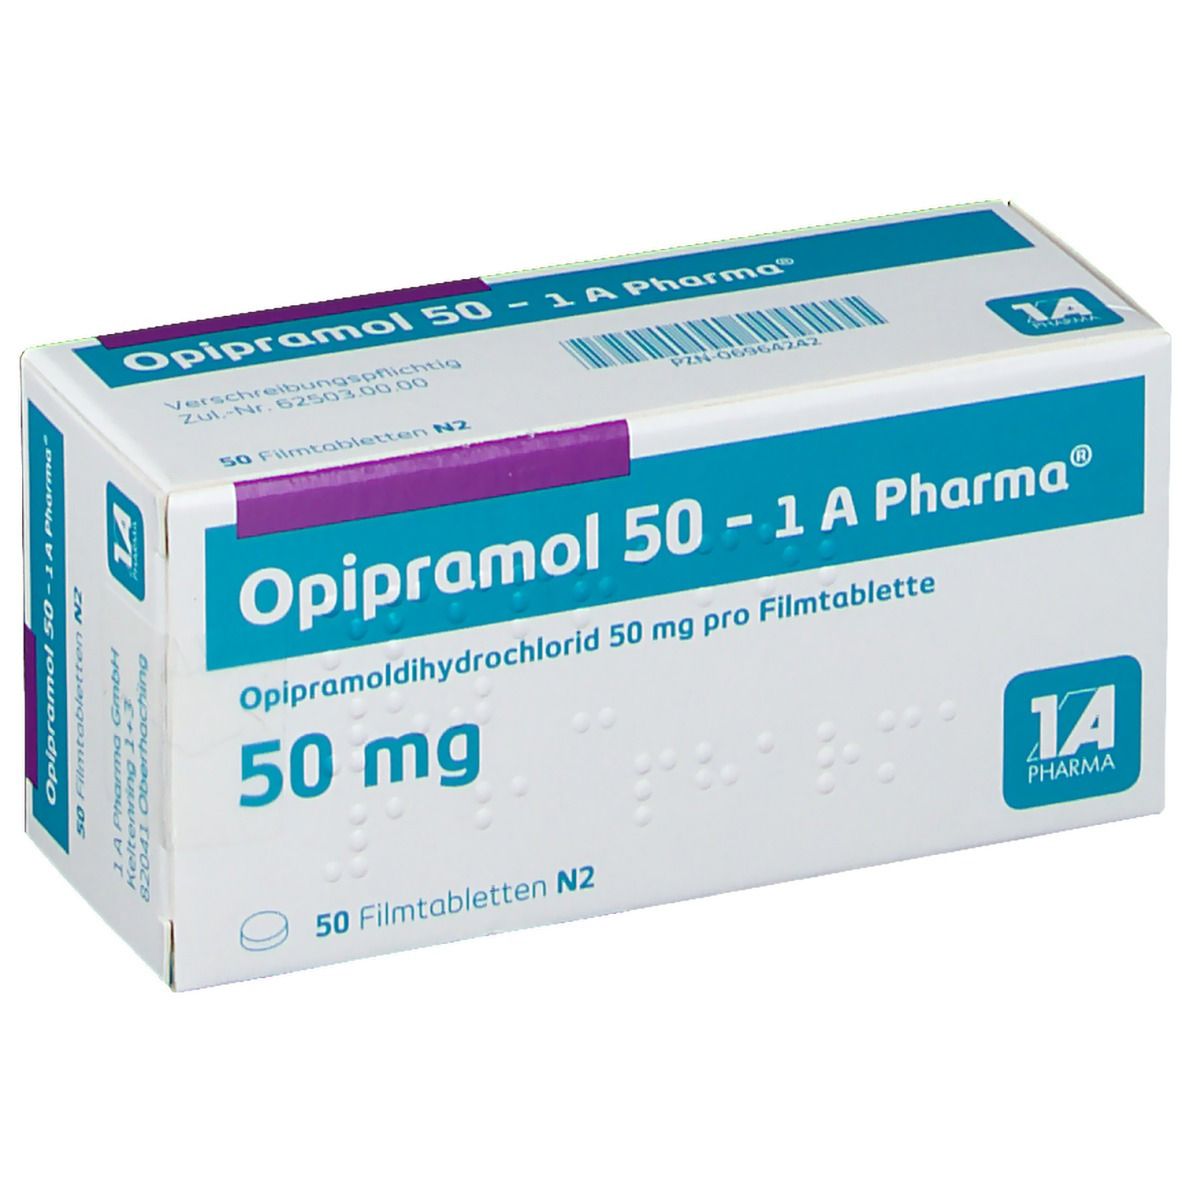 Opipramol 1A Pharma® 50Mg